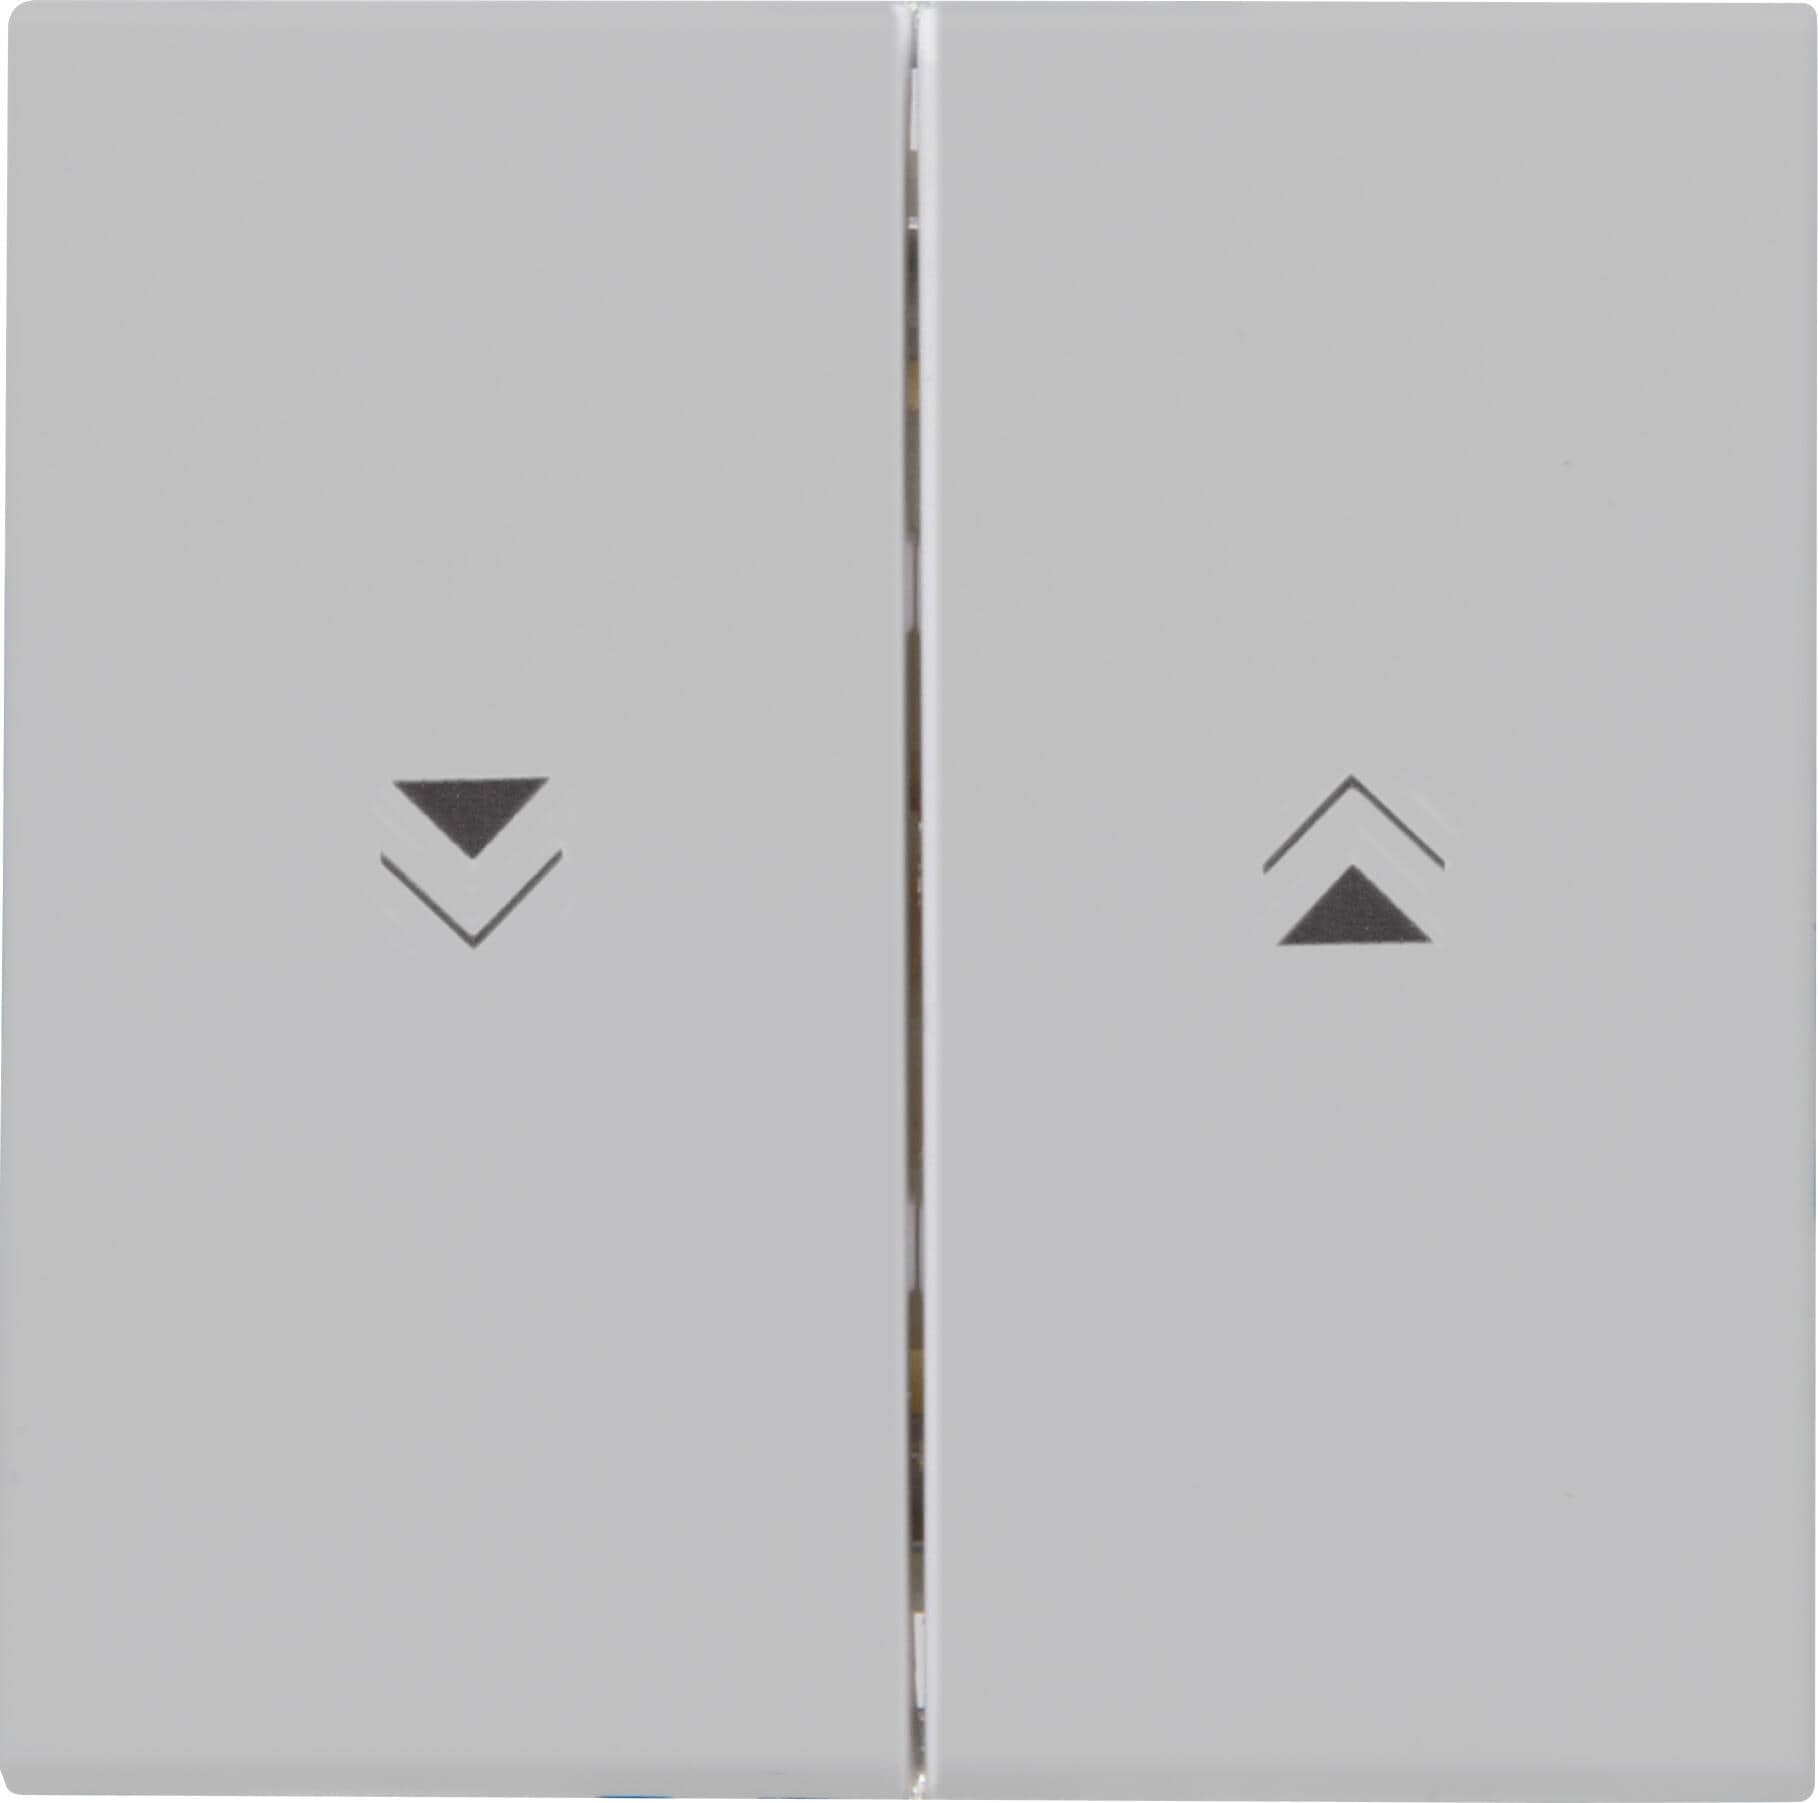 Kopp 490339004 HK07 - Flächendoppelwippe mit Pfeilsymbol, Farbe: grau matt